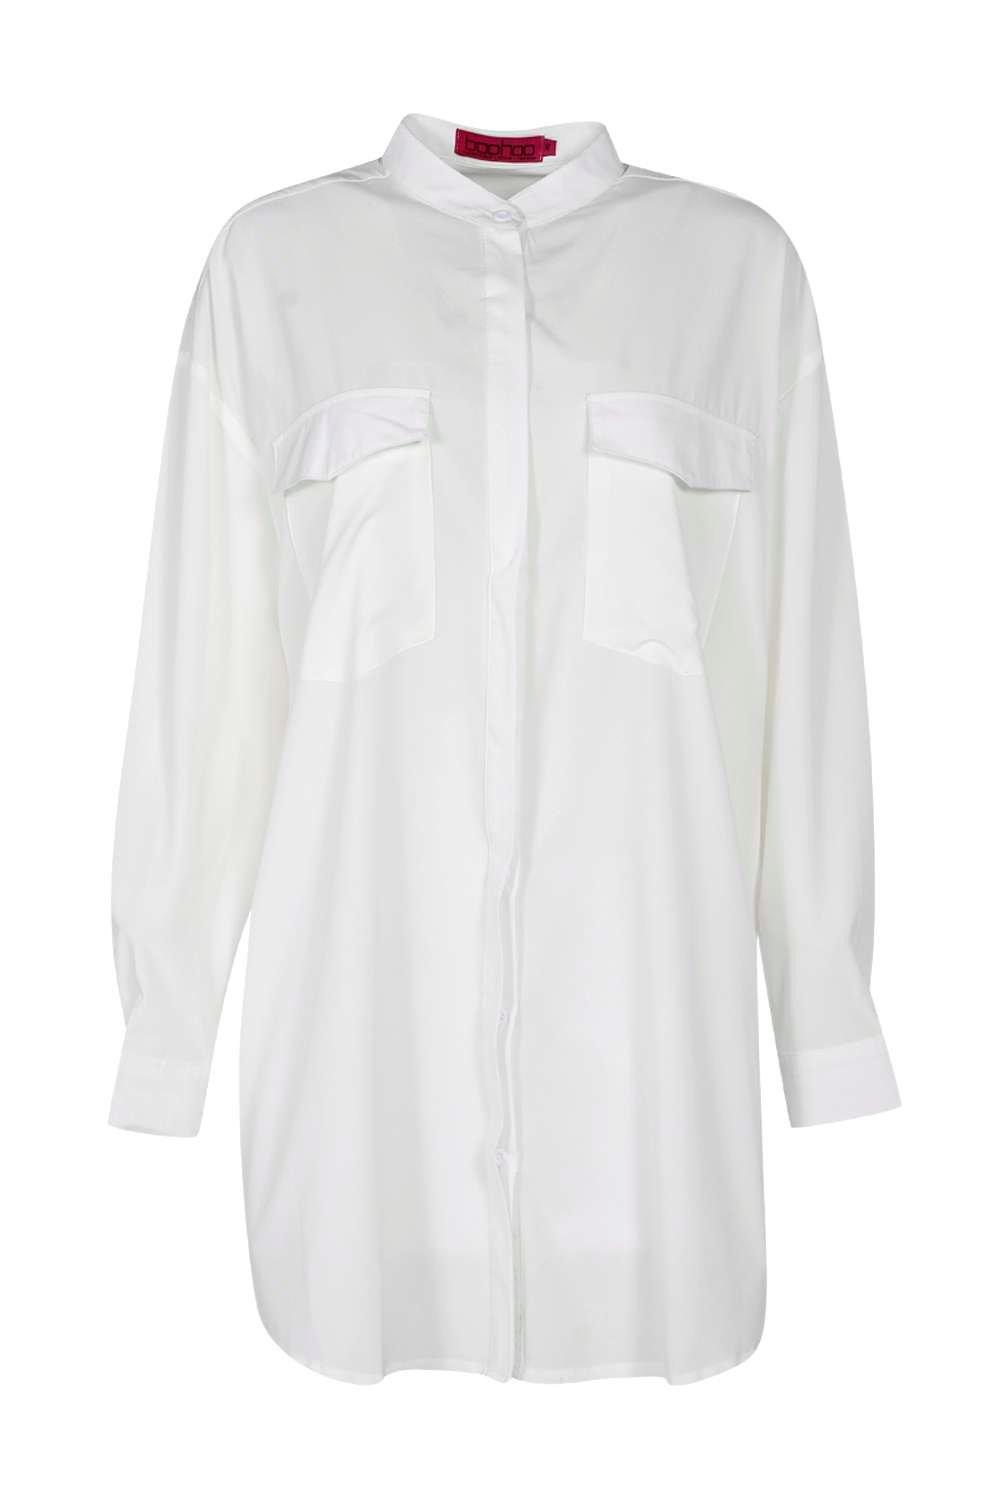 Boohoo Womens Alyssa Longline Grandad Collar Boyfriend Shirt | eBay